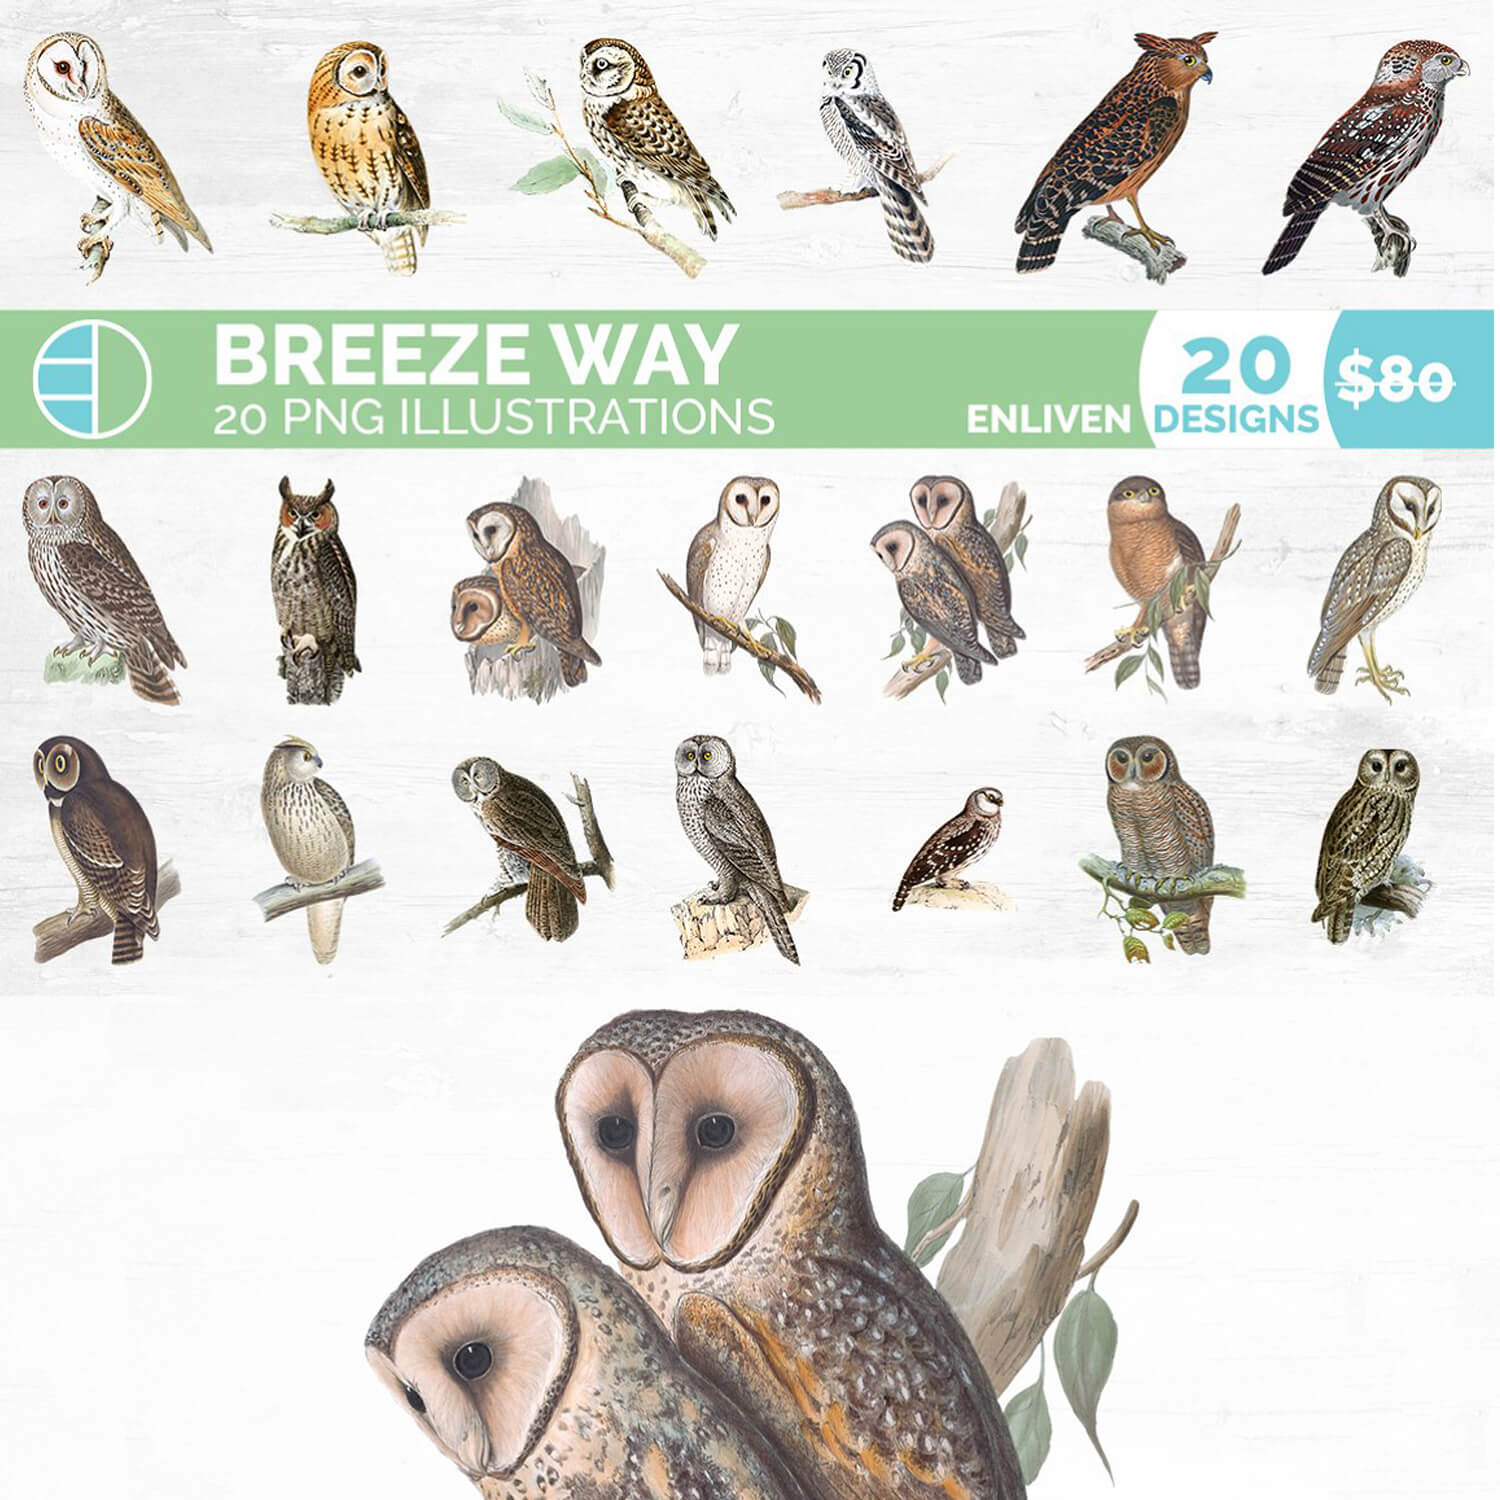 Twenty-two owls in the image titled: Breeze Way, 20 PNG Illustration, Enliven designs.